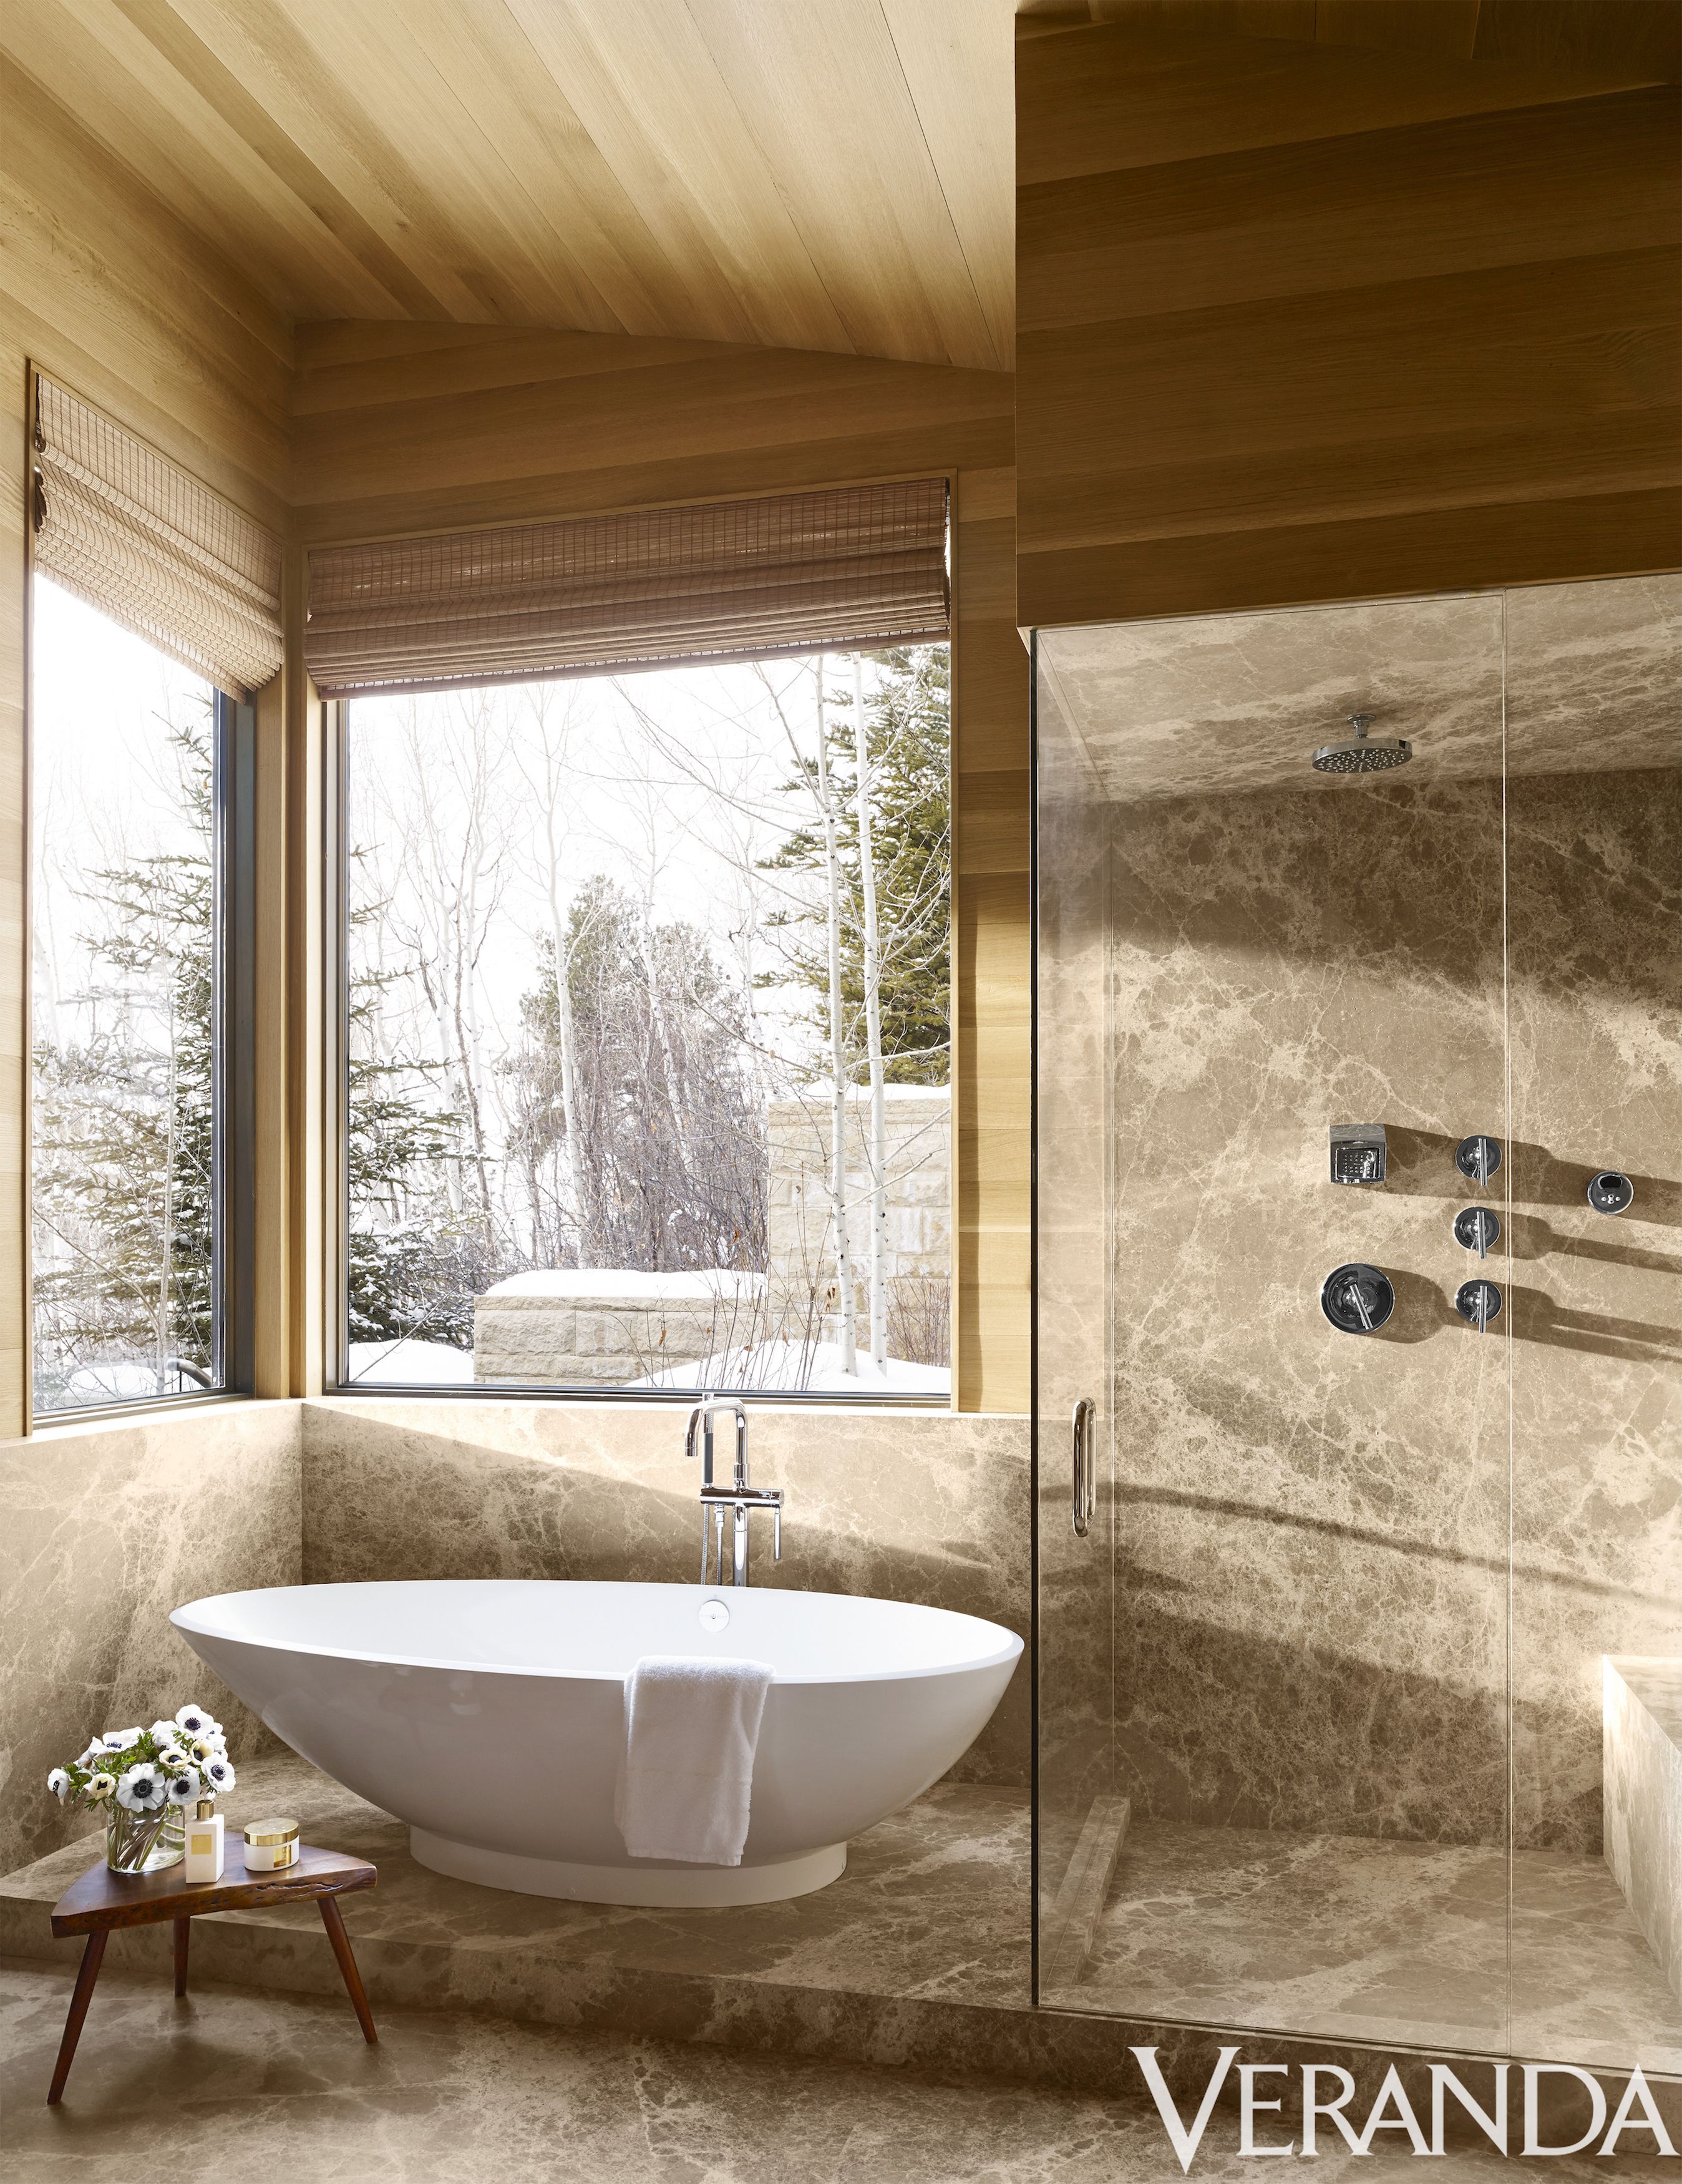 35 Best Bathroom Design Ideas Pictures Of Beautiful Bathrooms